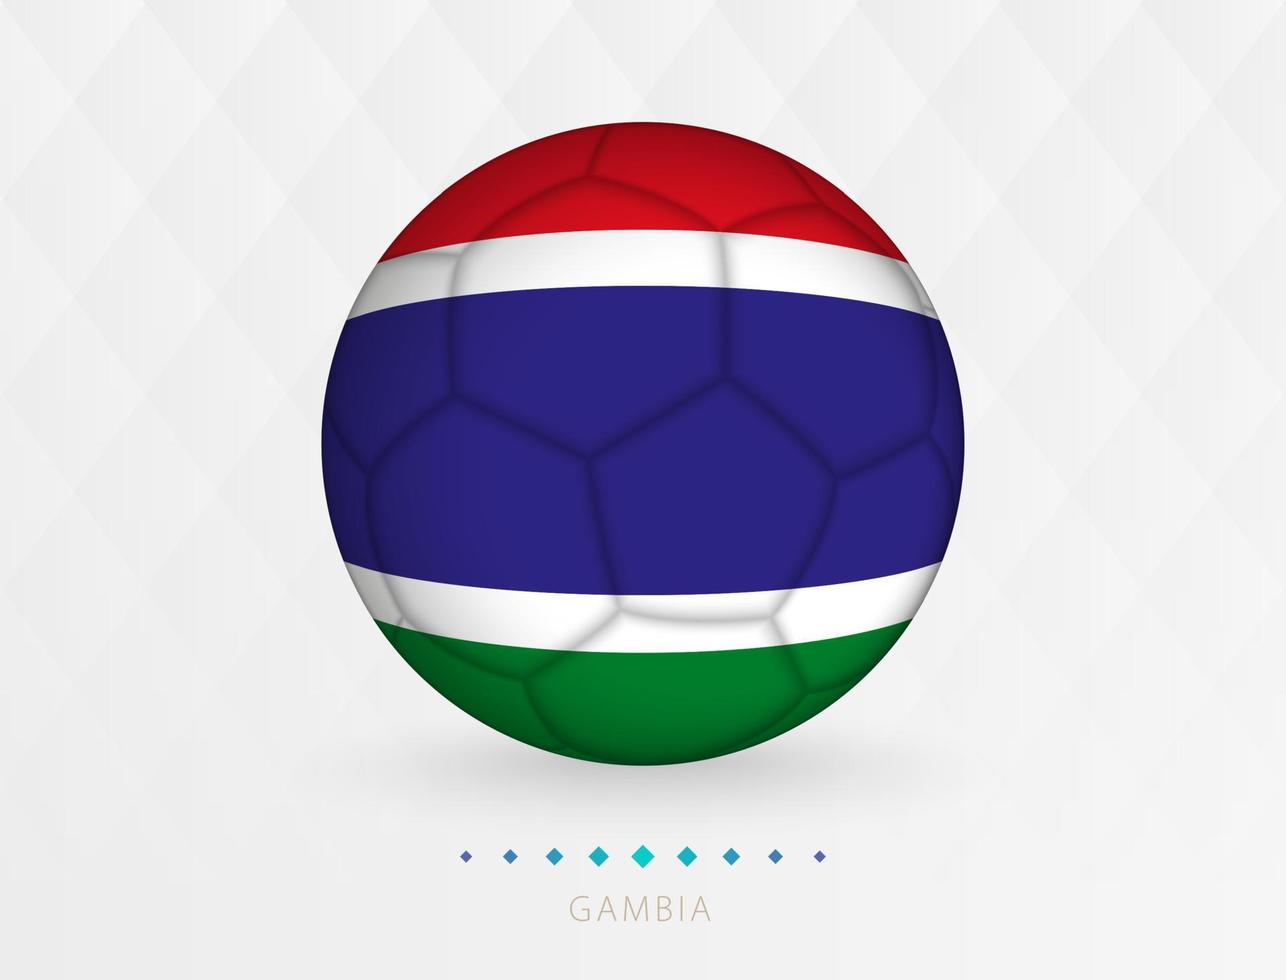 ballon de football avec motif drapeau gambien, ballon de football avec drapeau de l'équipe nationale de gambie. vecteur